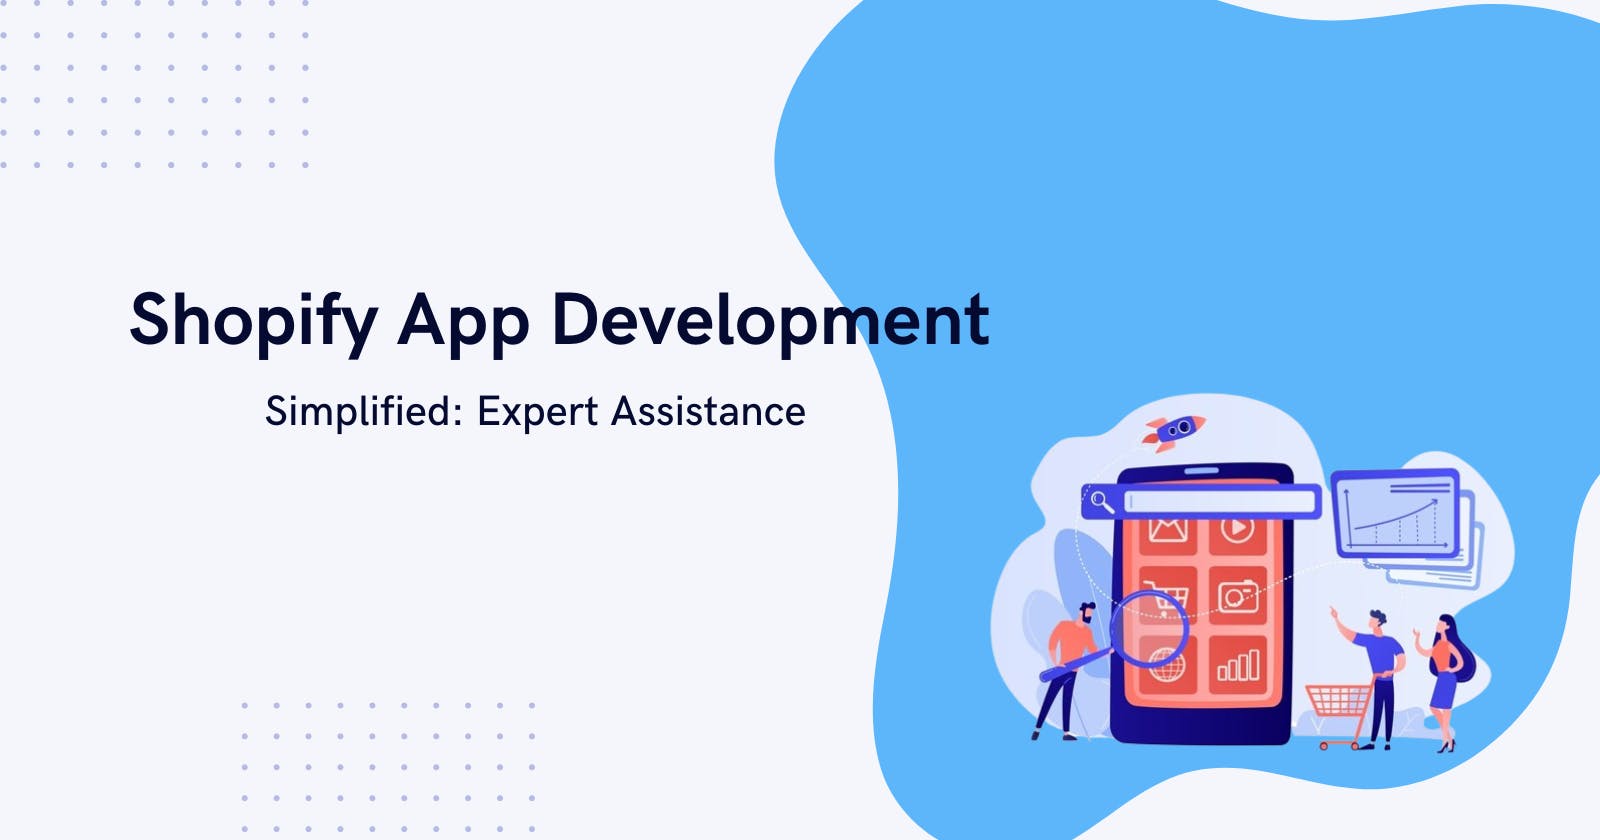 Shopify App Development Simplified: Expert Assistance